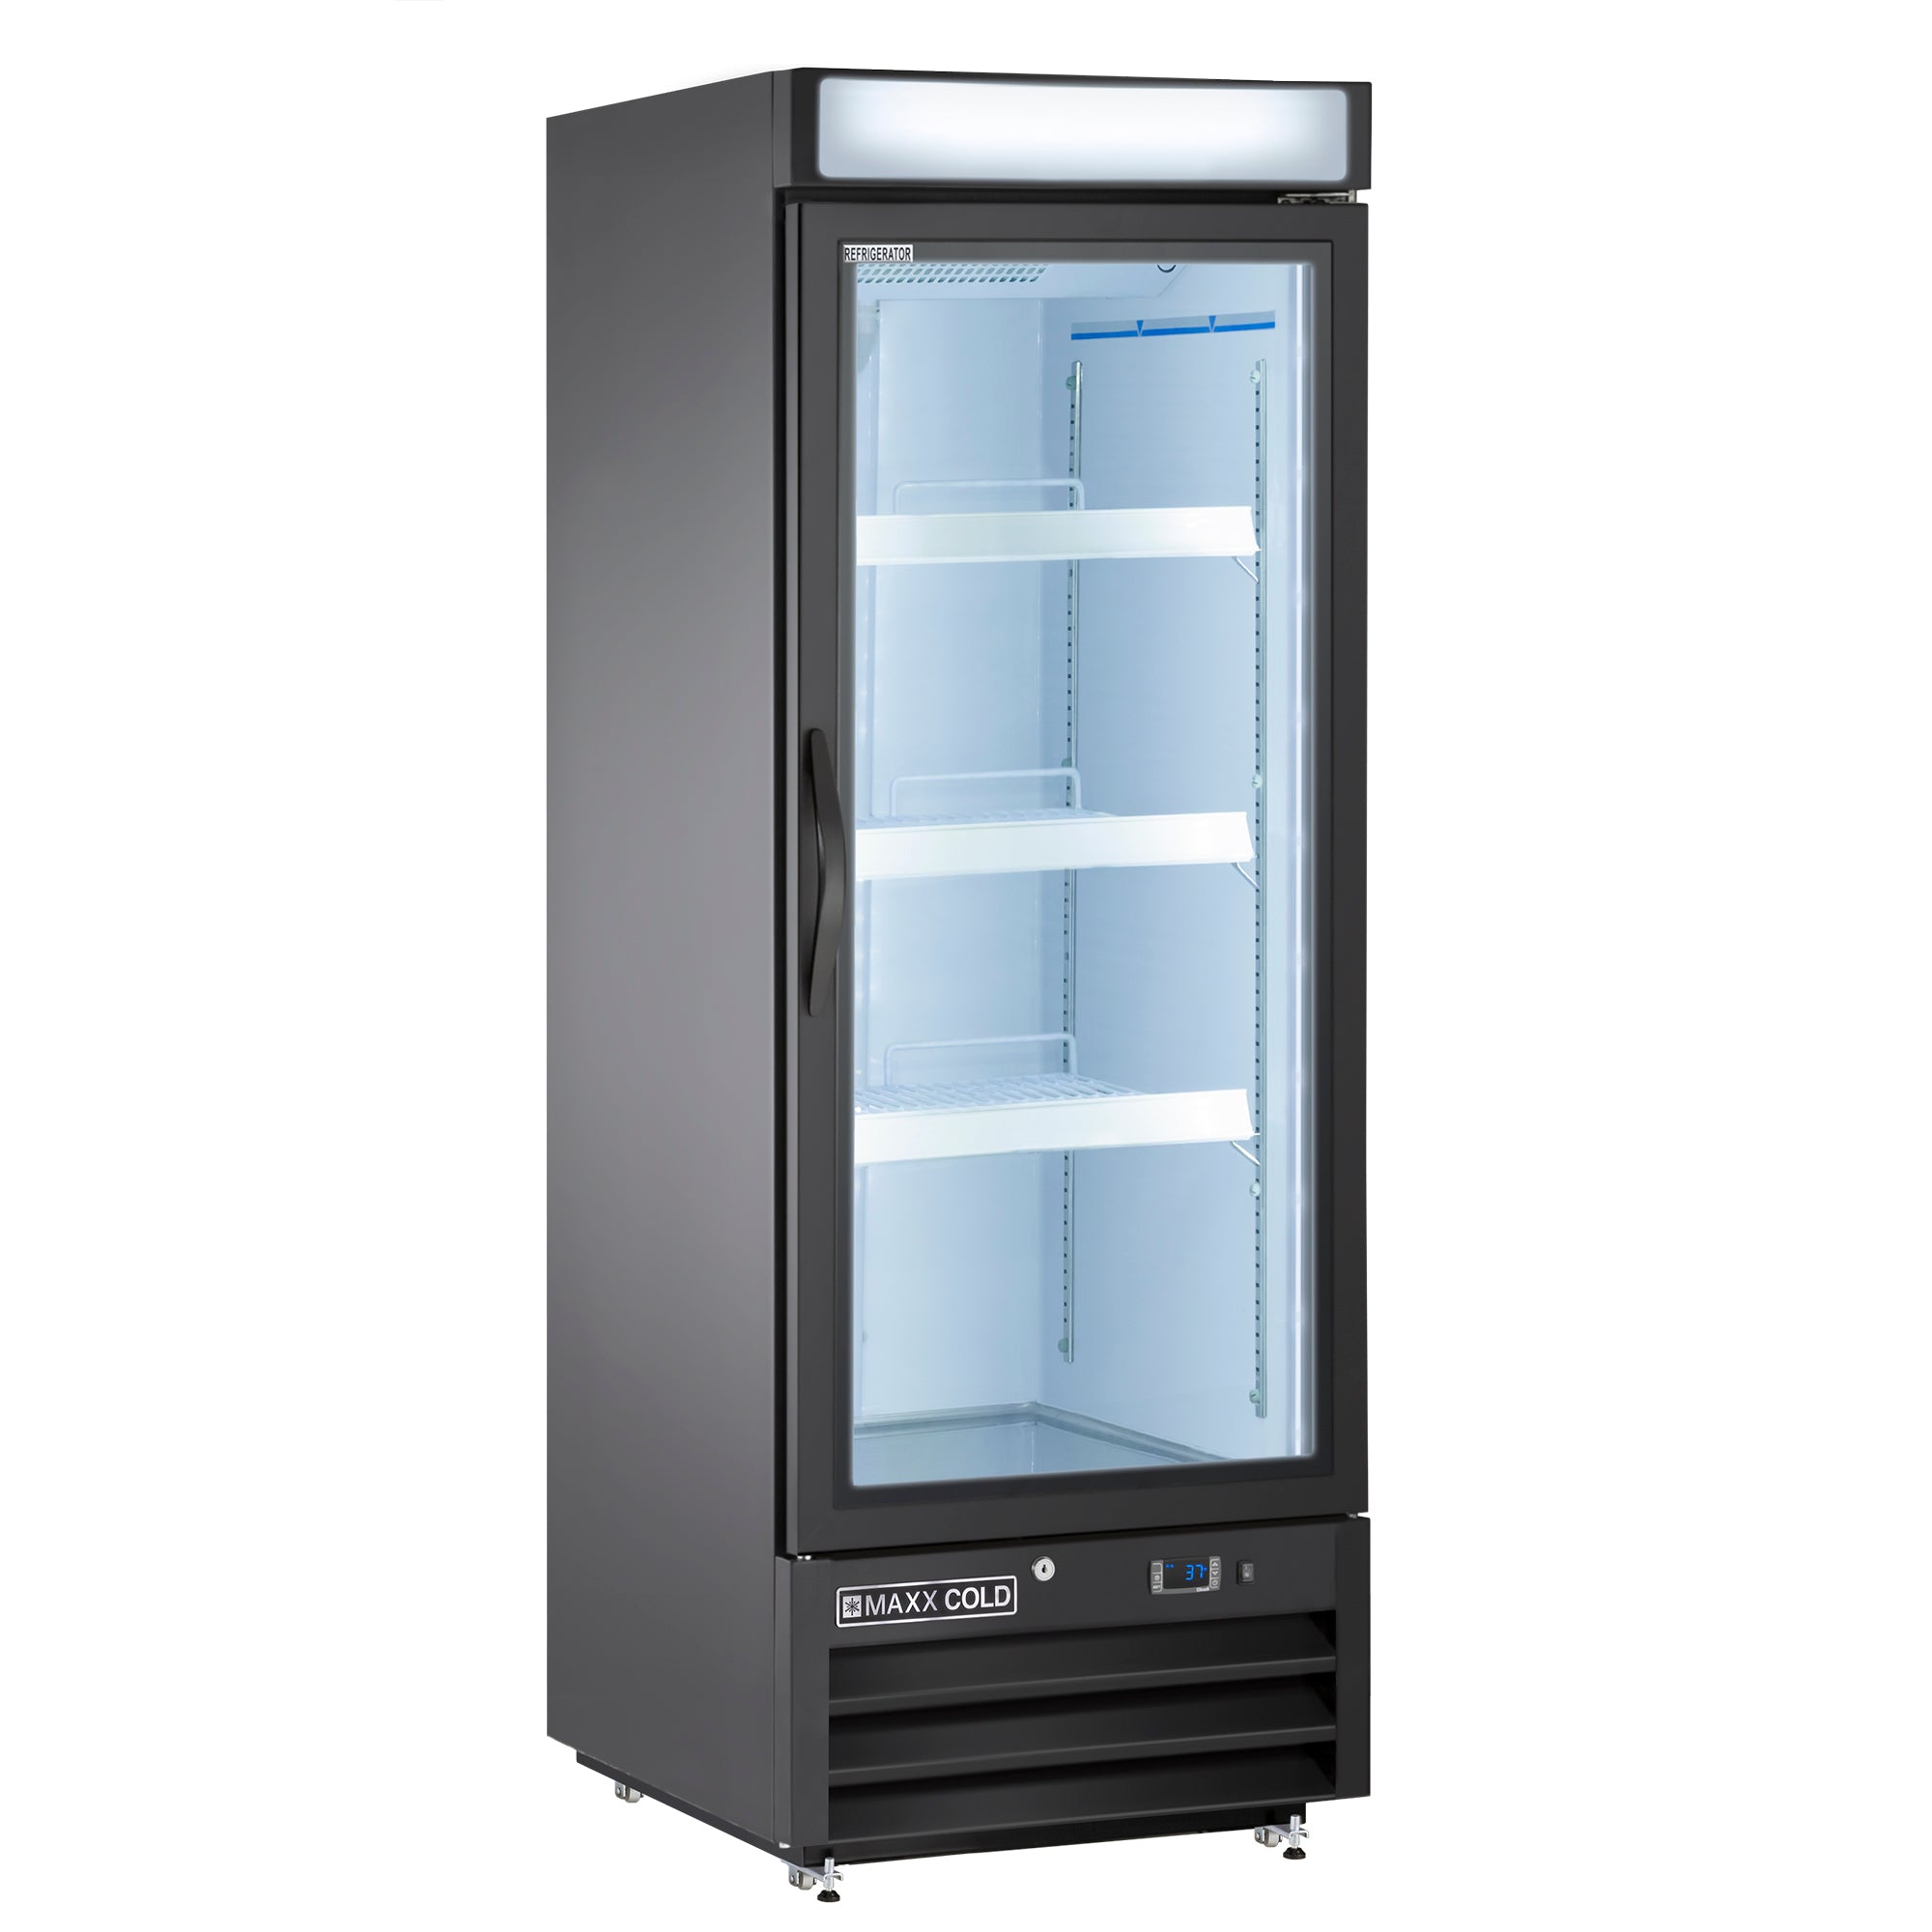 Maxx Cold - MXM1-16RBHC, Maxx Cold Single Glass Door Merchandiser Refrigerator, Free Standing, 25"W, 16 cu. ft. Storage Capacity, in Black